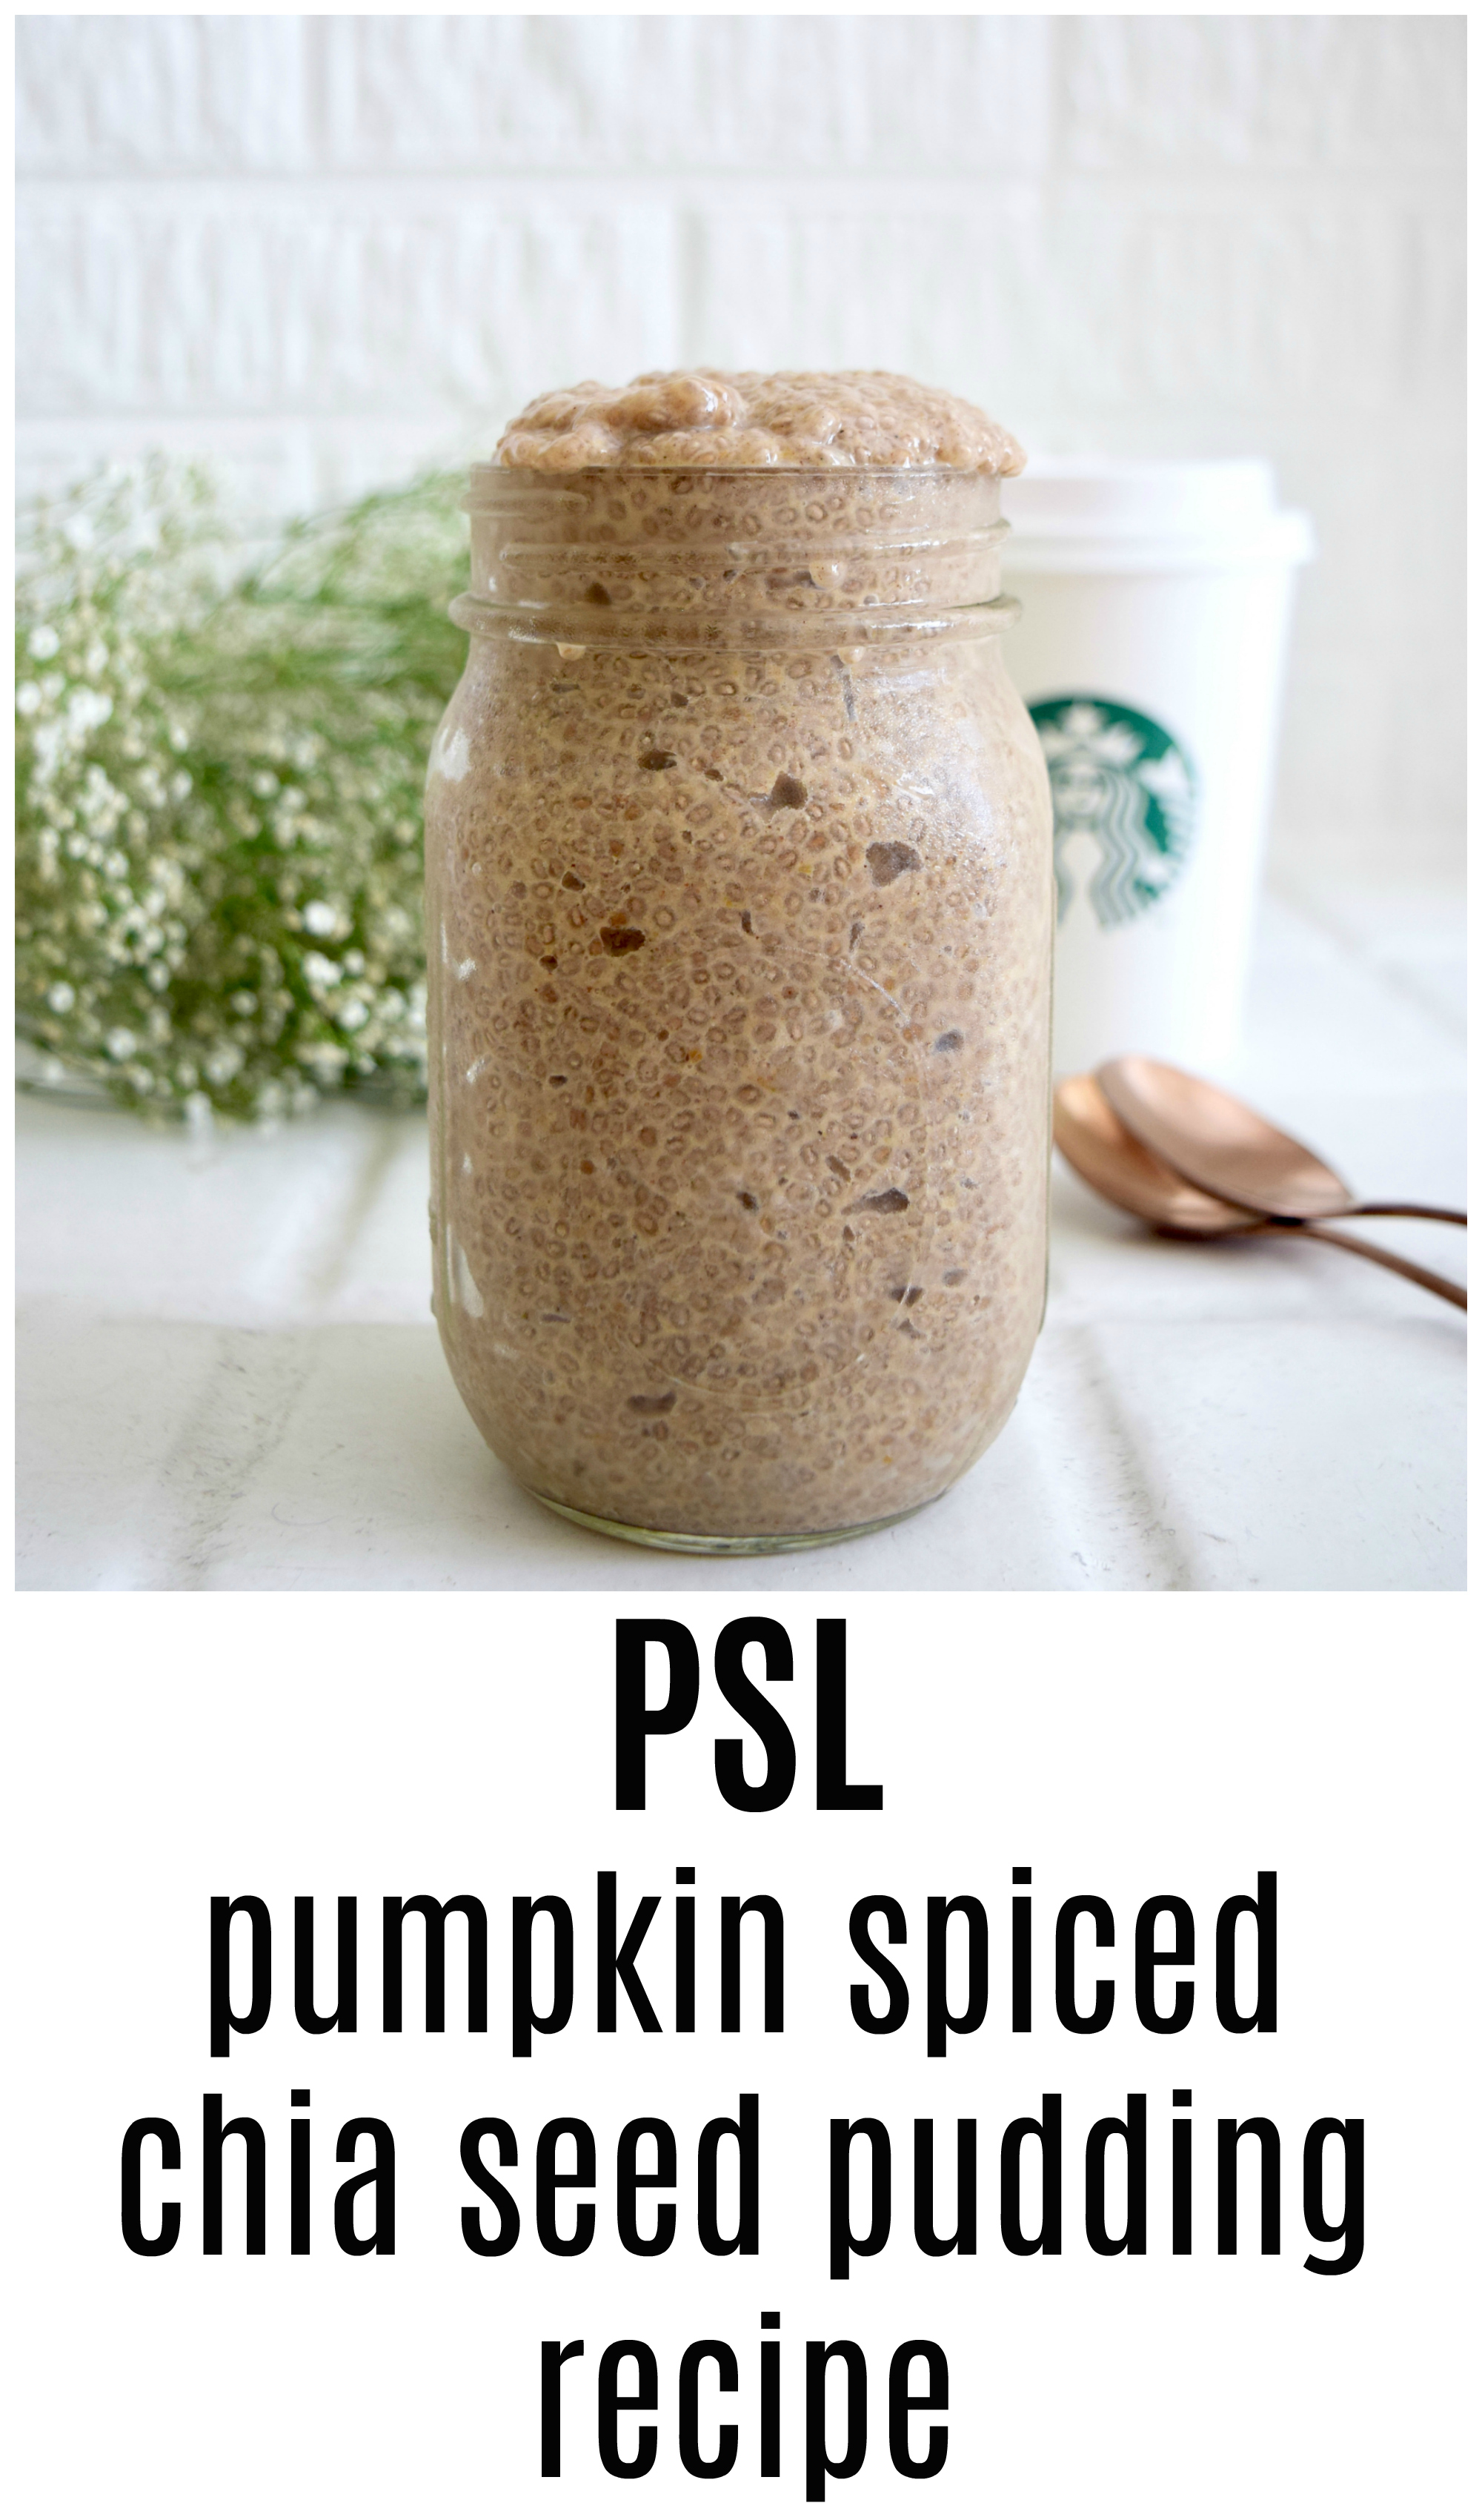 PSL pumpkin spiced chia seed pudding recipe